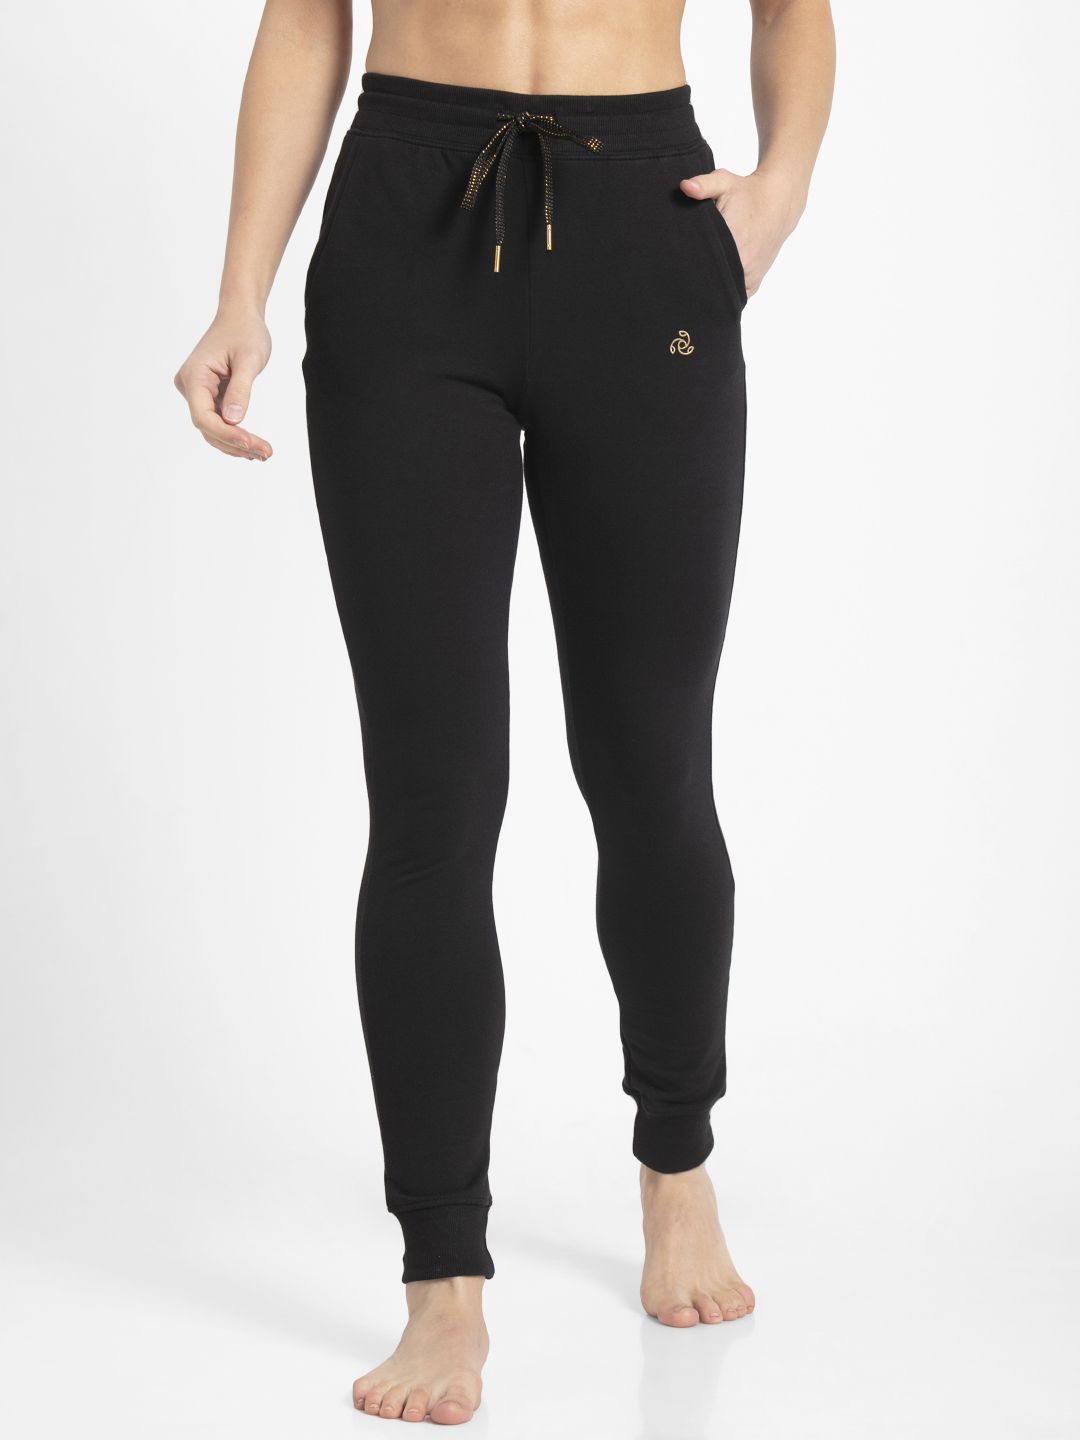 Jockey Women Black Slim Fit Lounge Pant 1323 Price in India